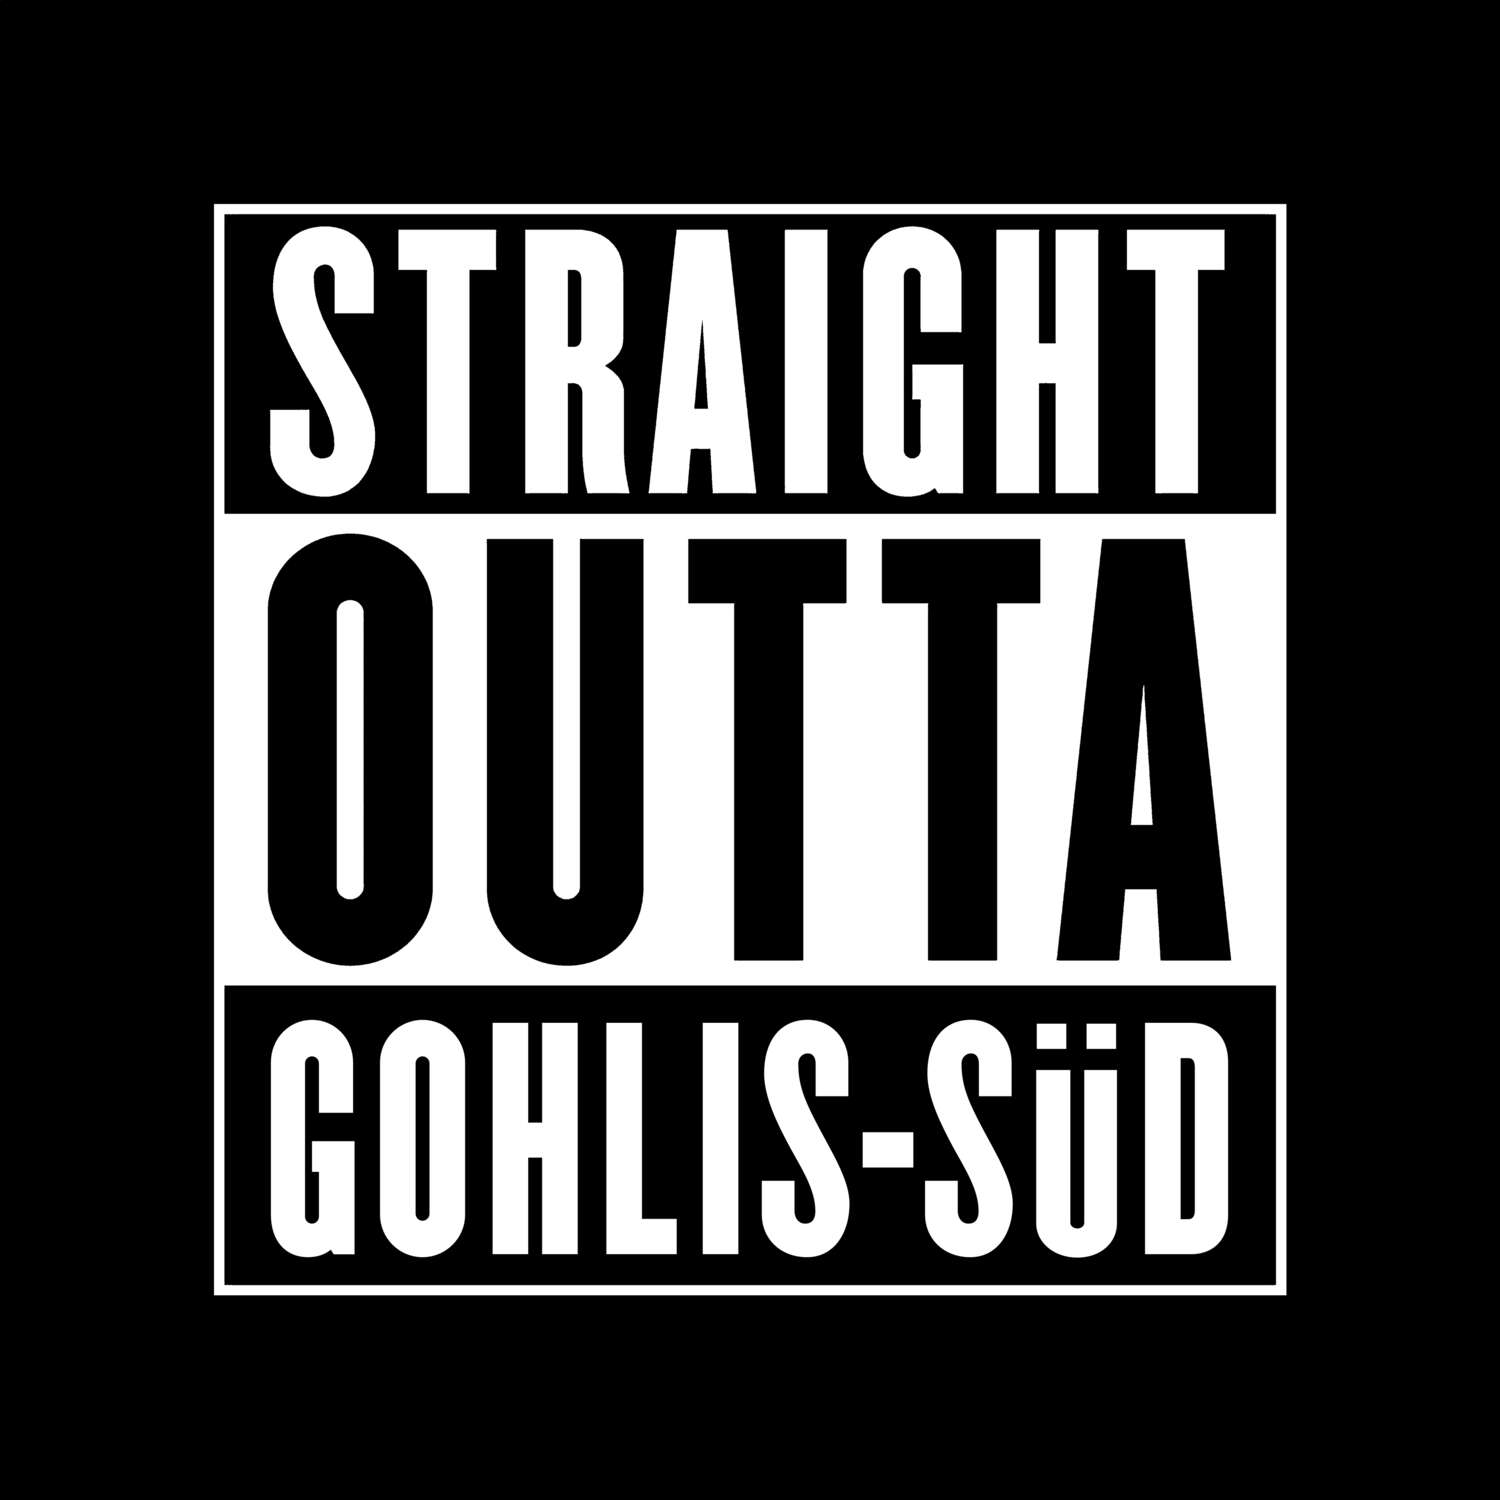 Gohlis-Süd T-Shirt »Straight Outta«